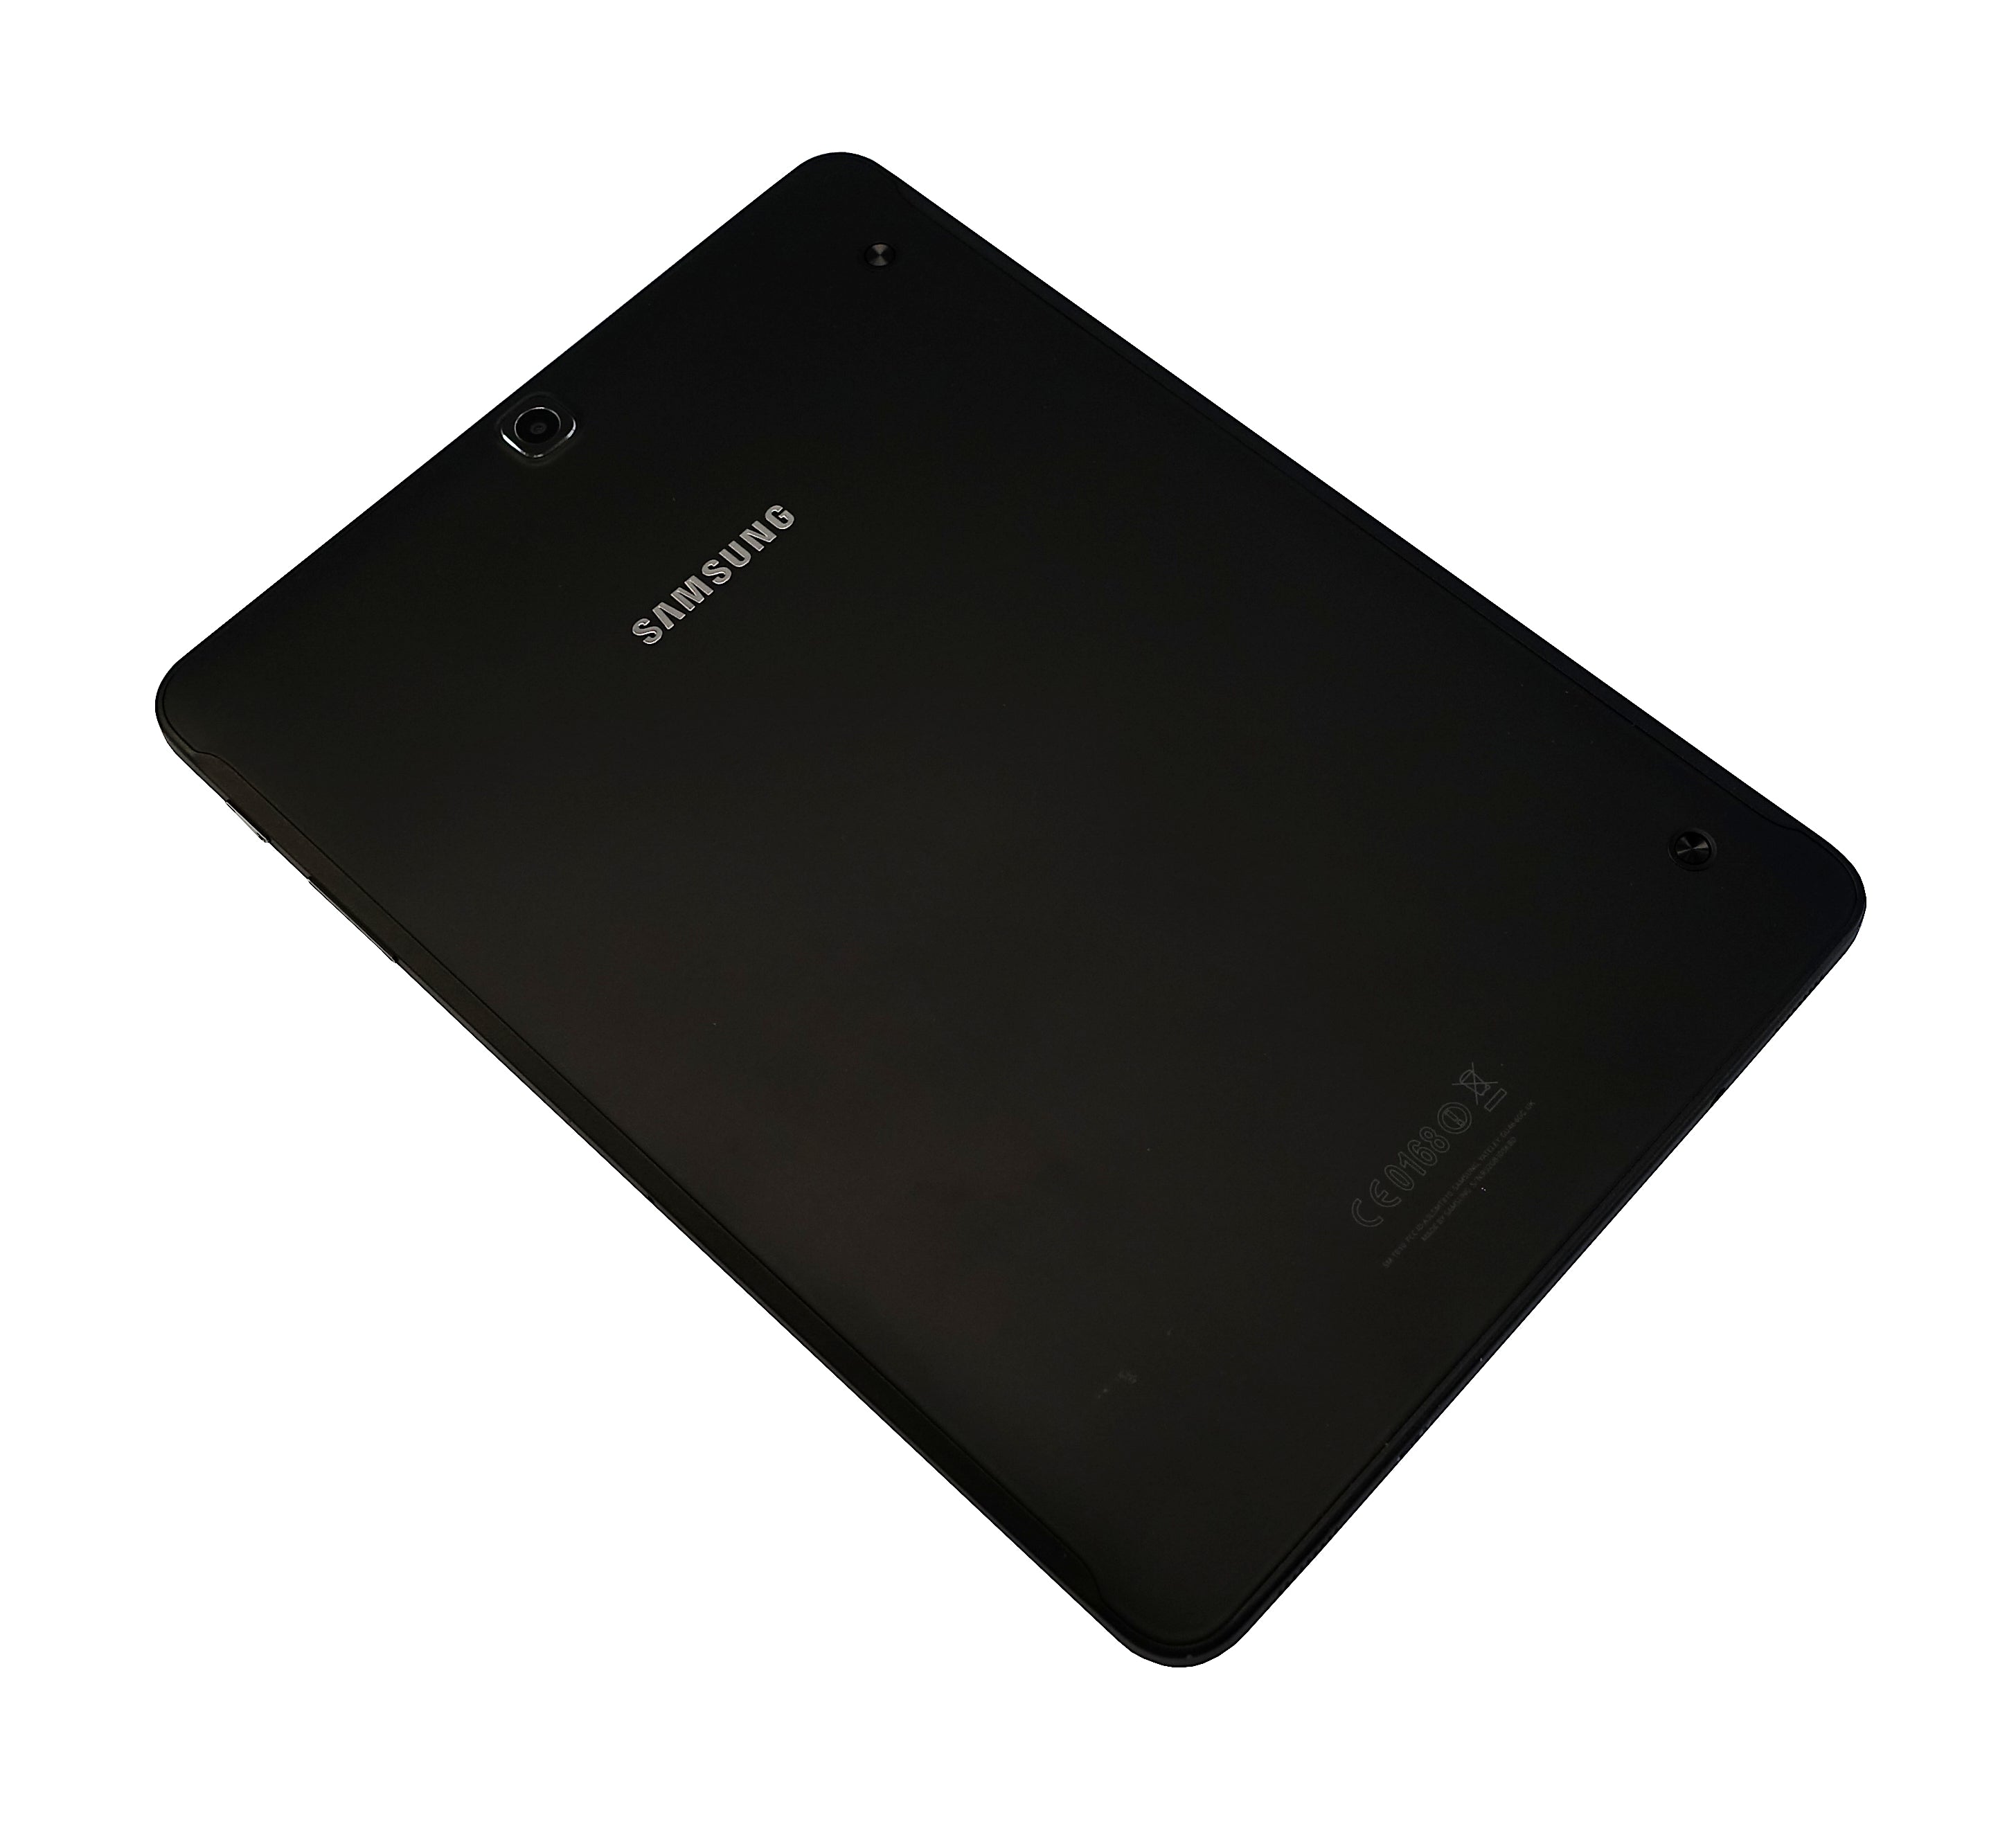 Samsung Galaxy Tab S2 9.7" Tablet, WiFi, 32GB, Black, SM-T810